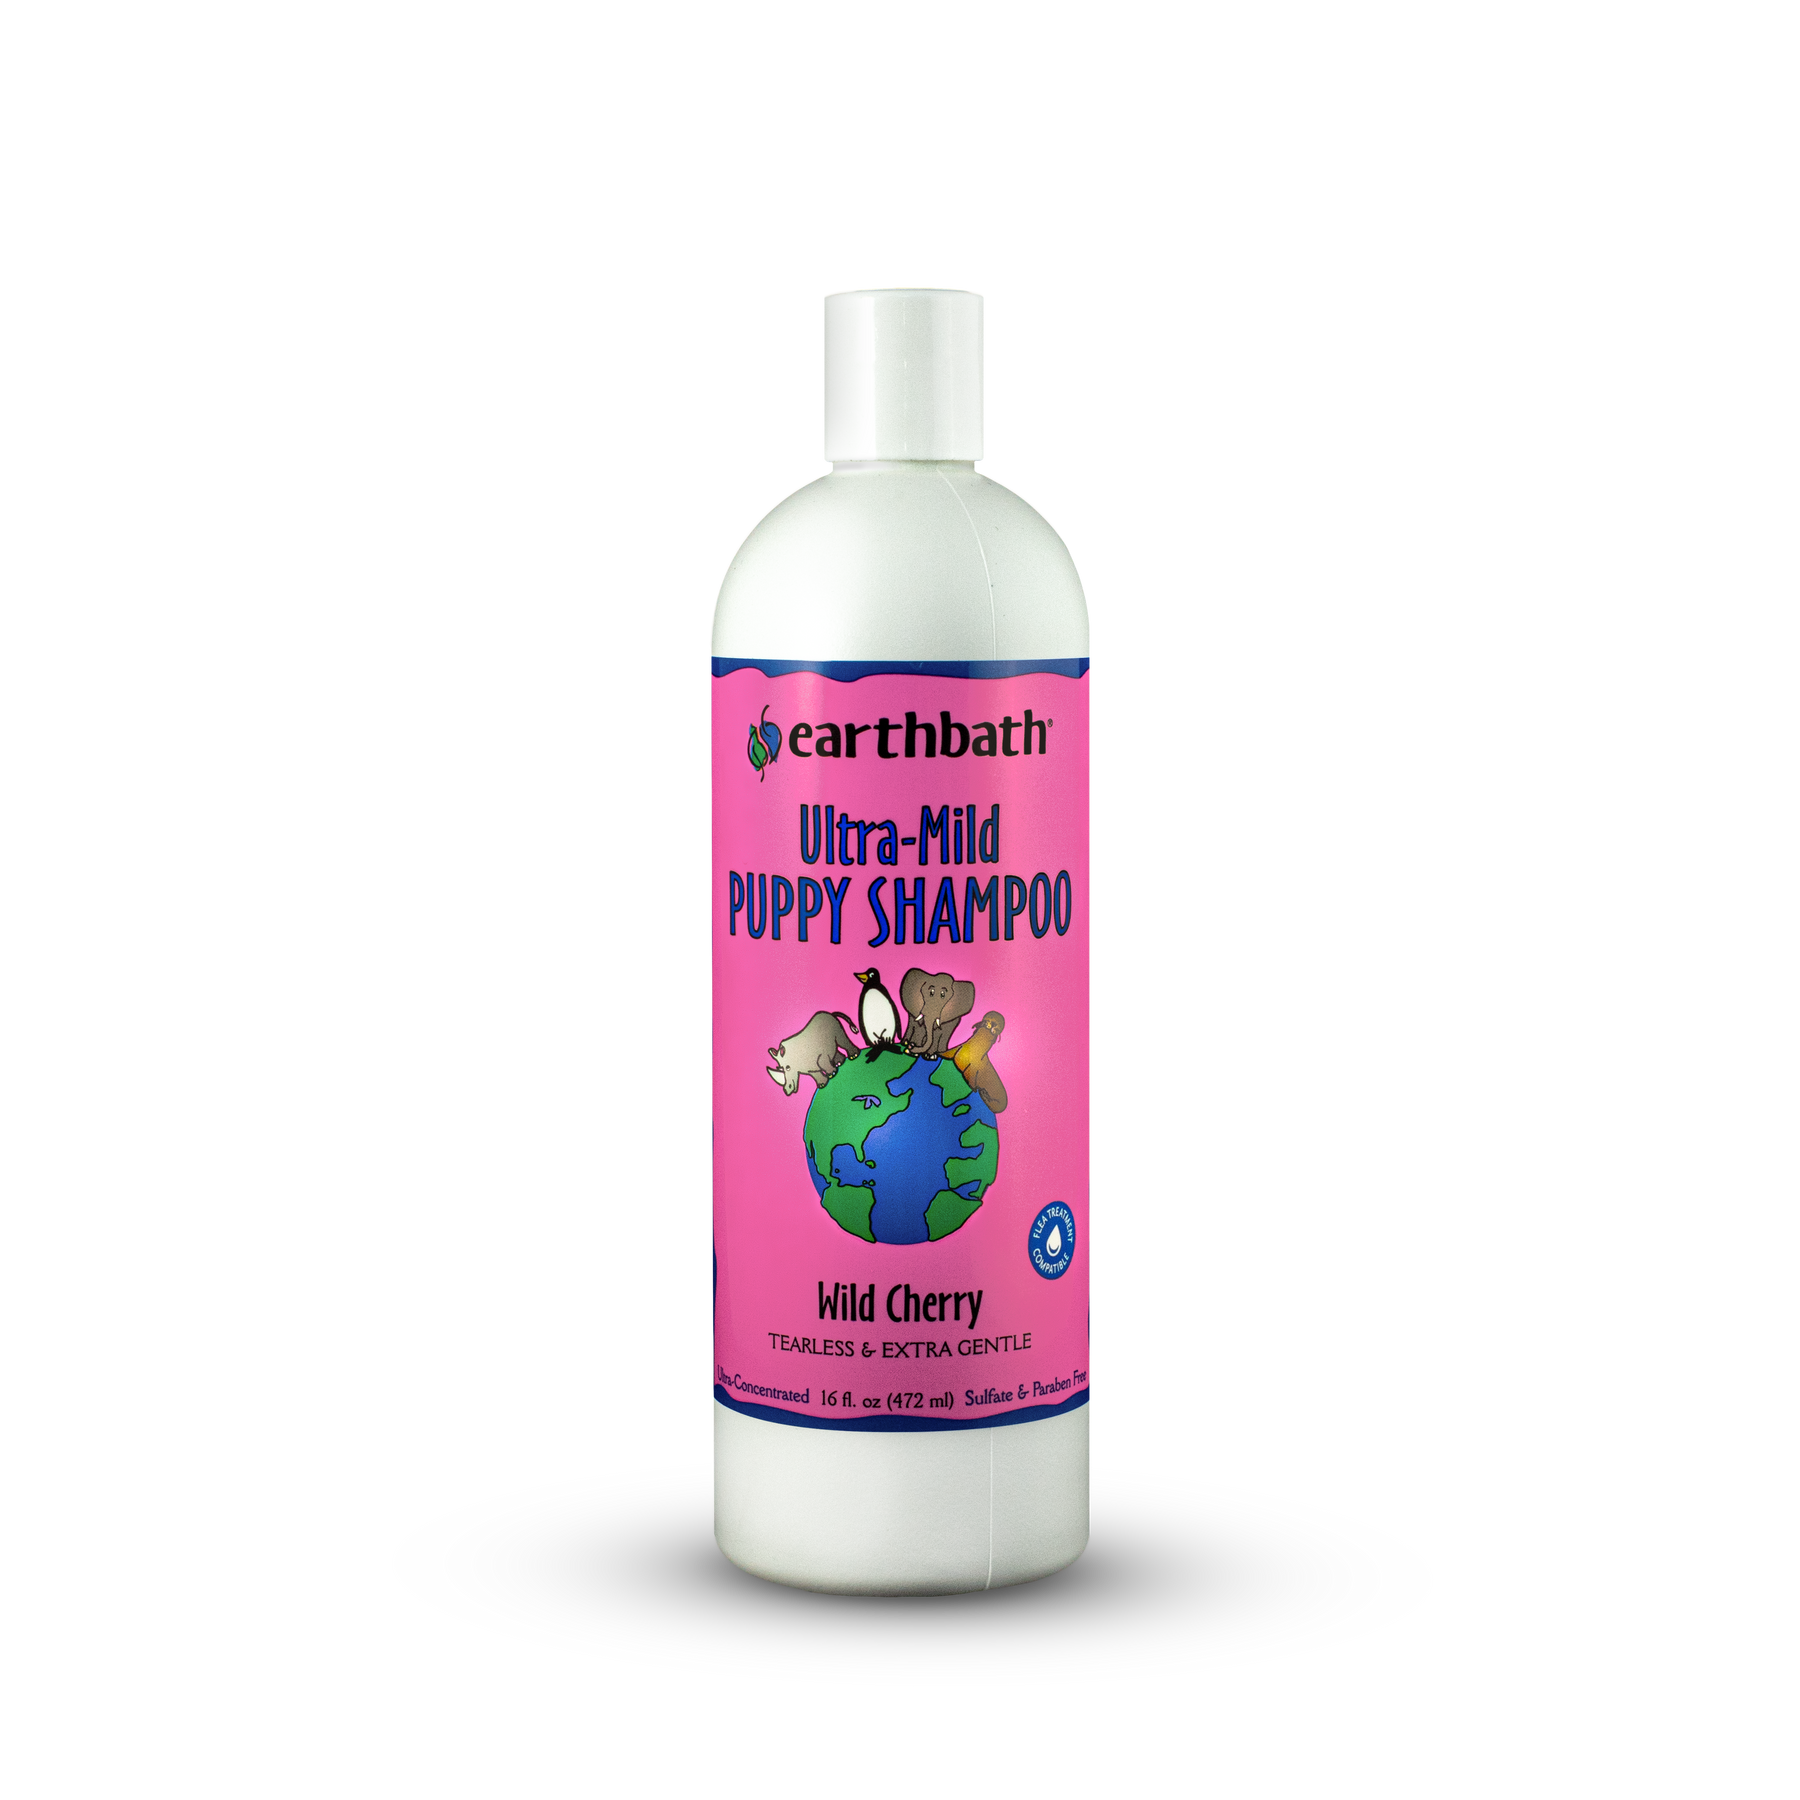 Shampoo, Tearless Gentle | earthbath®